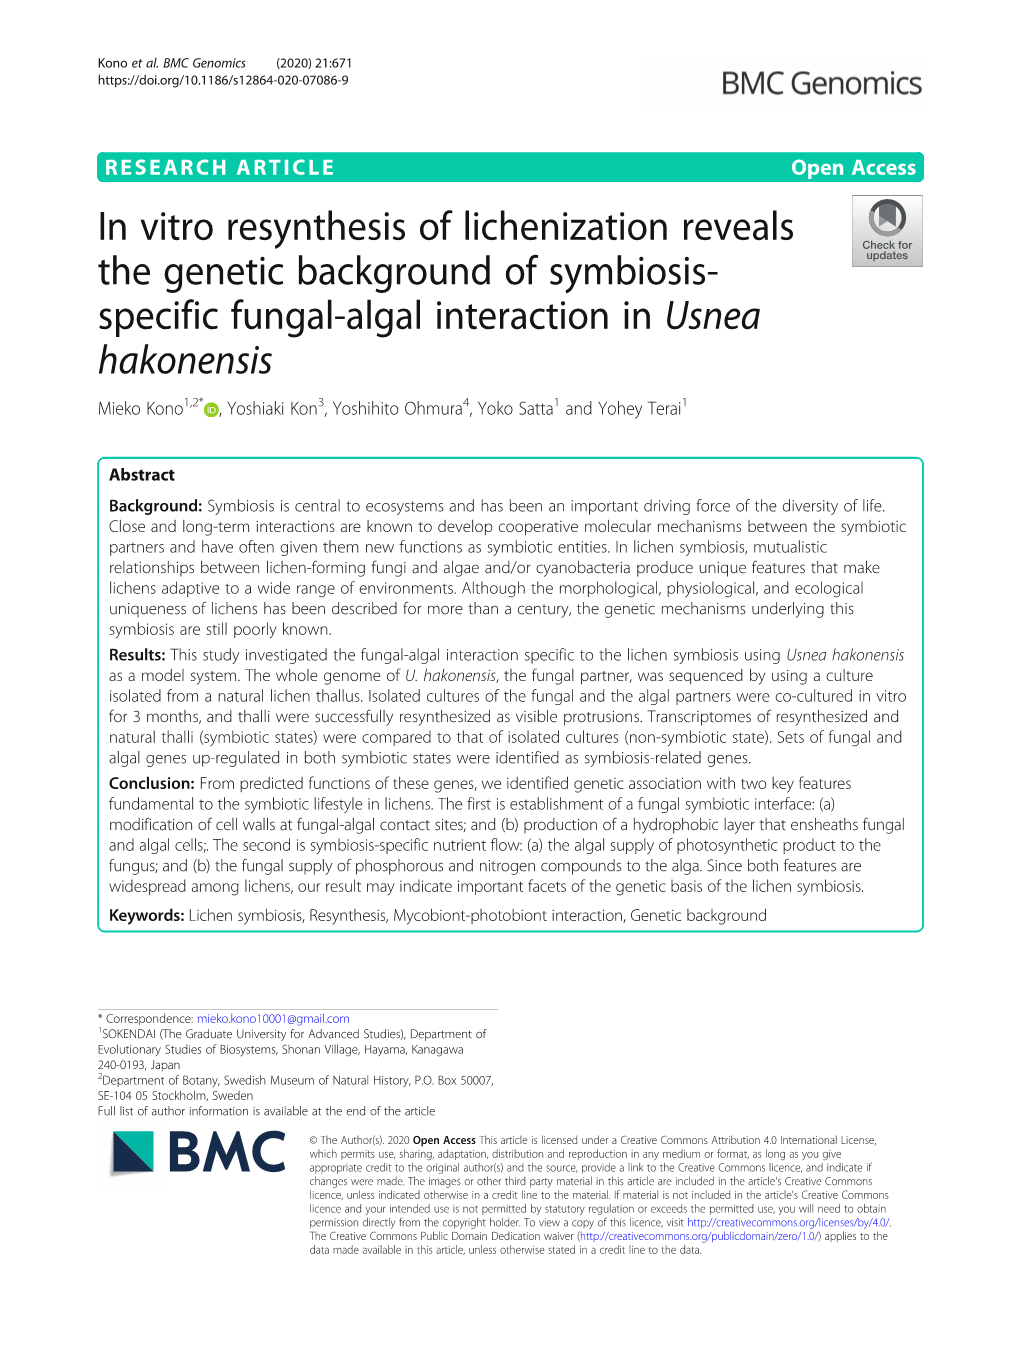 Specific Fungal-Algal Interaction in Usnea Hakonensis